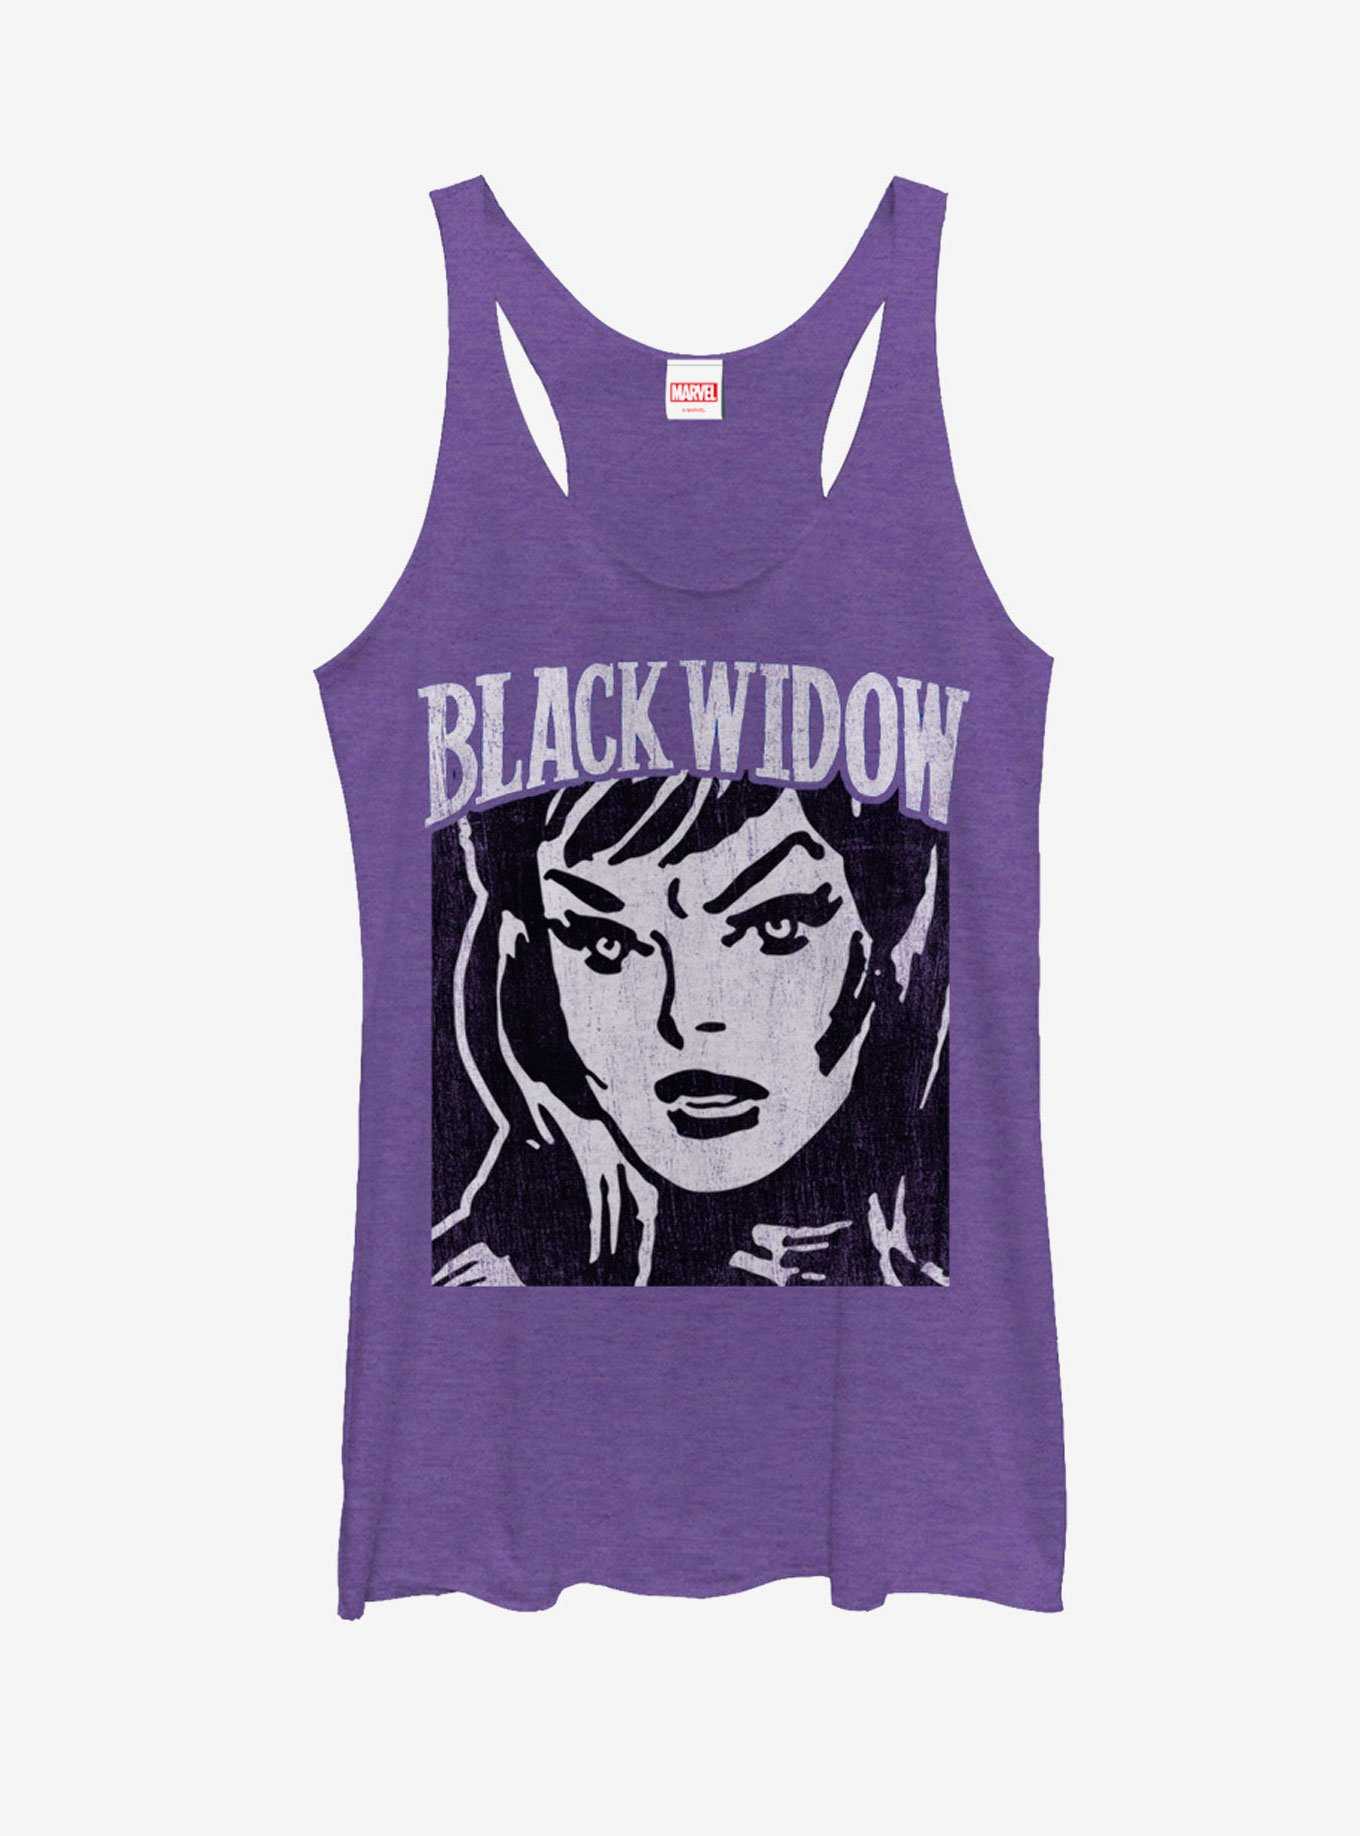 OFFICIAL Black Widow | T-Shirts, Gifts & Merch BoxLunch